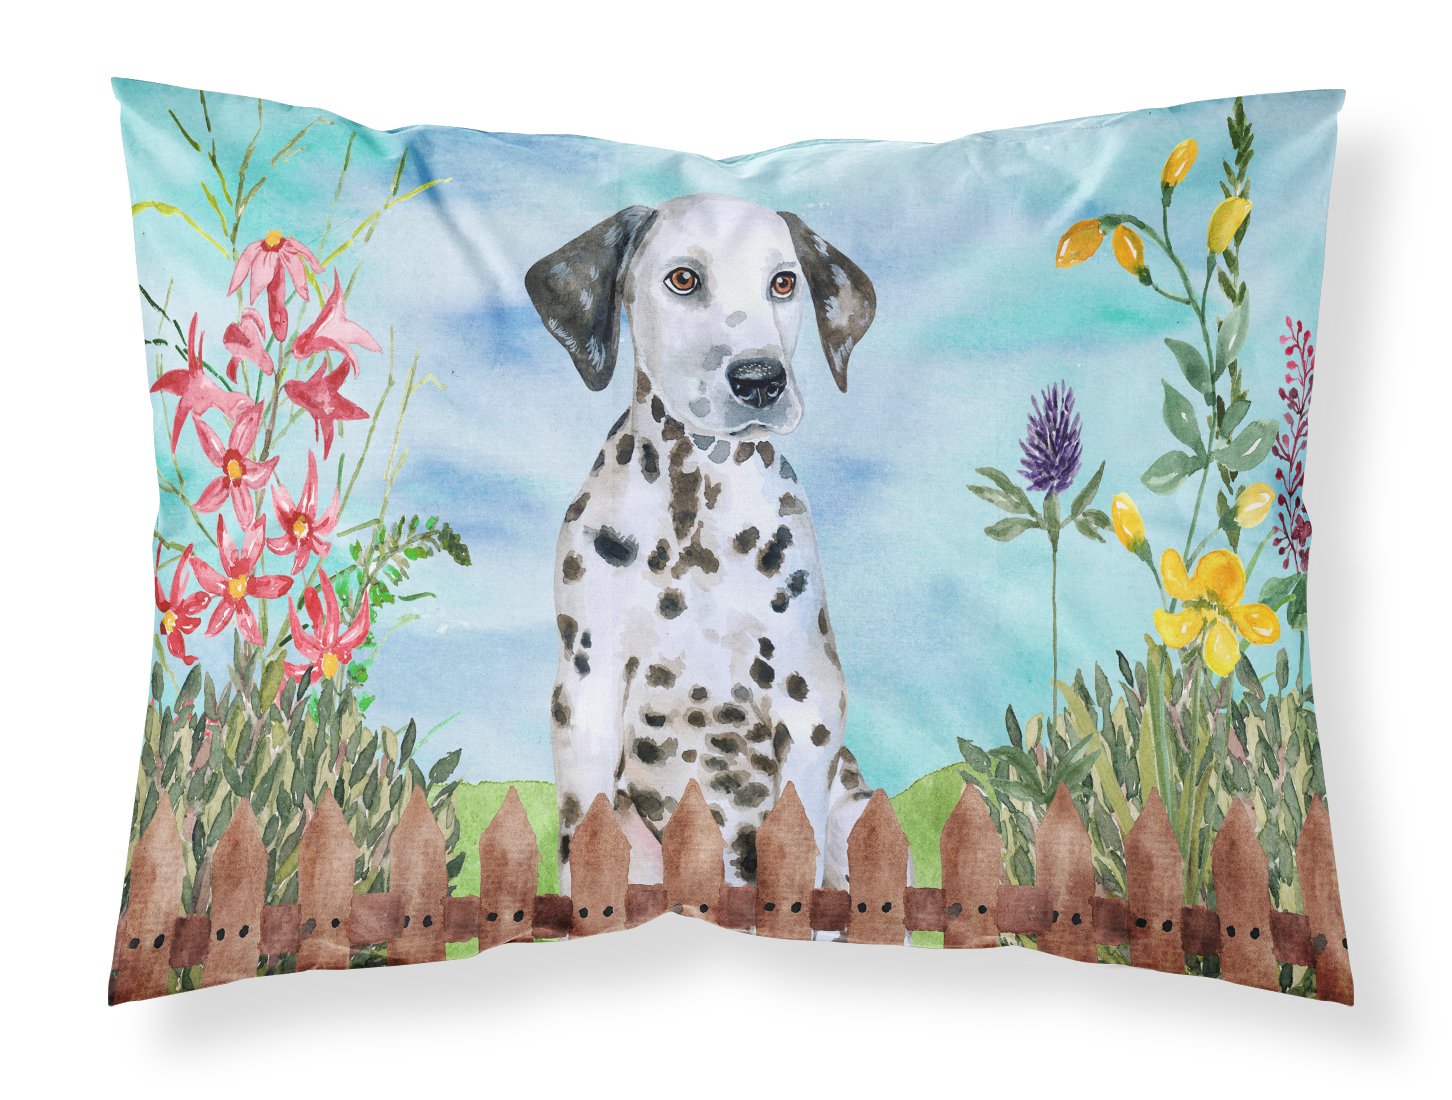 Dalmatian Puppy Spring Fabric Standard Pillowcase CK1270PILLOWCASE by Caroline's Treasures